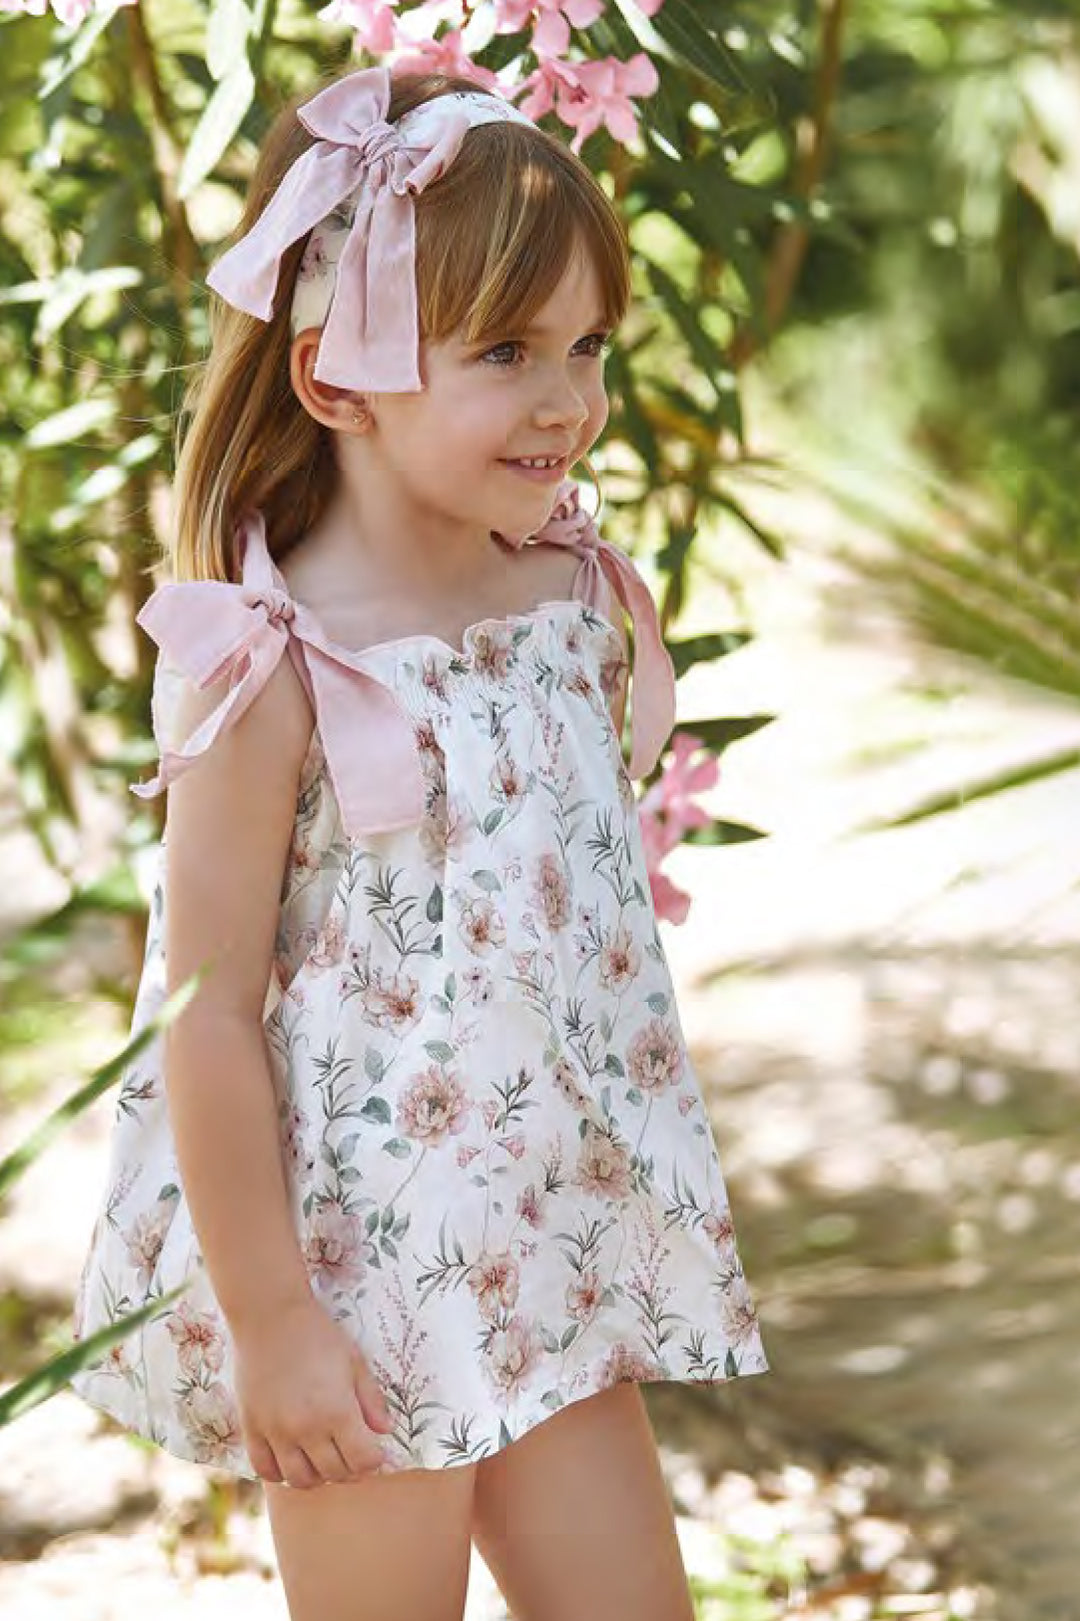 Juliana "Alia" Dusky Pink Floral Dress & Bloomers | Millie and John